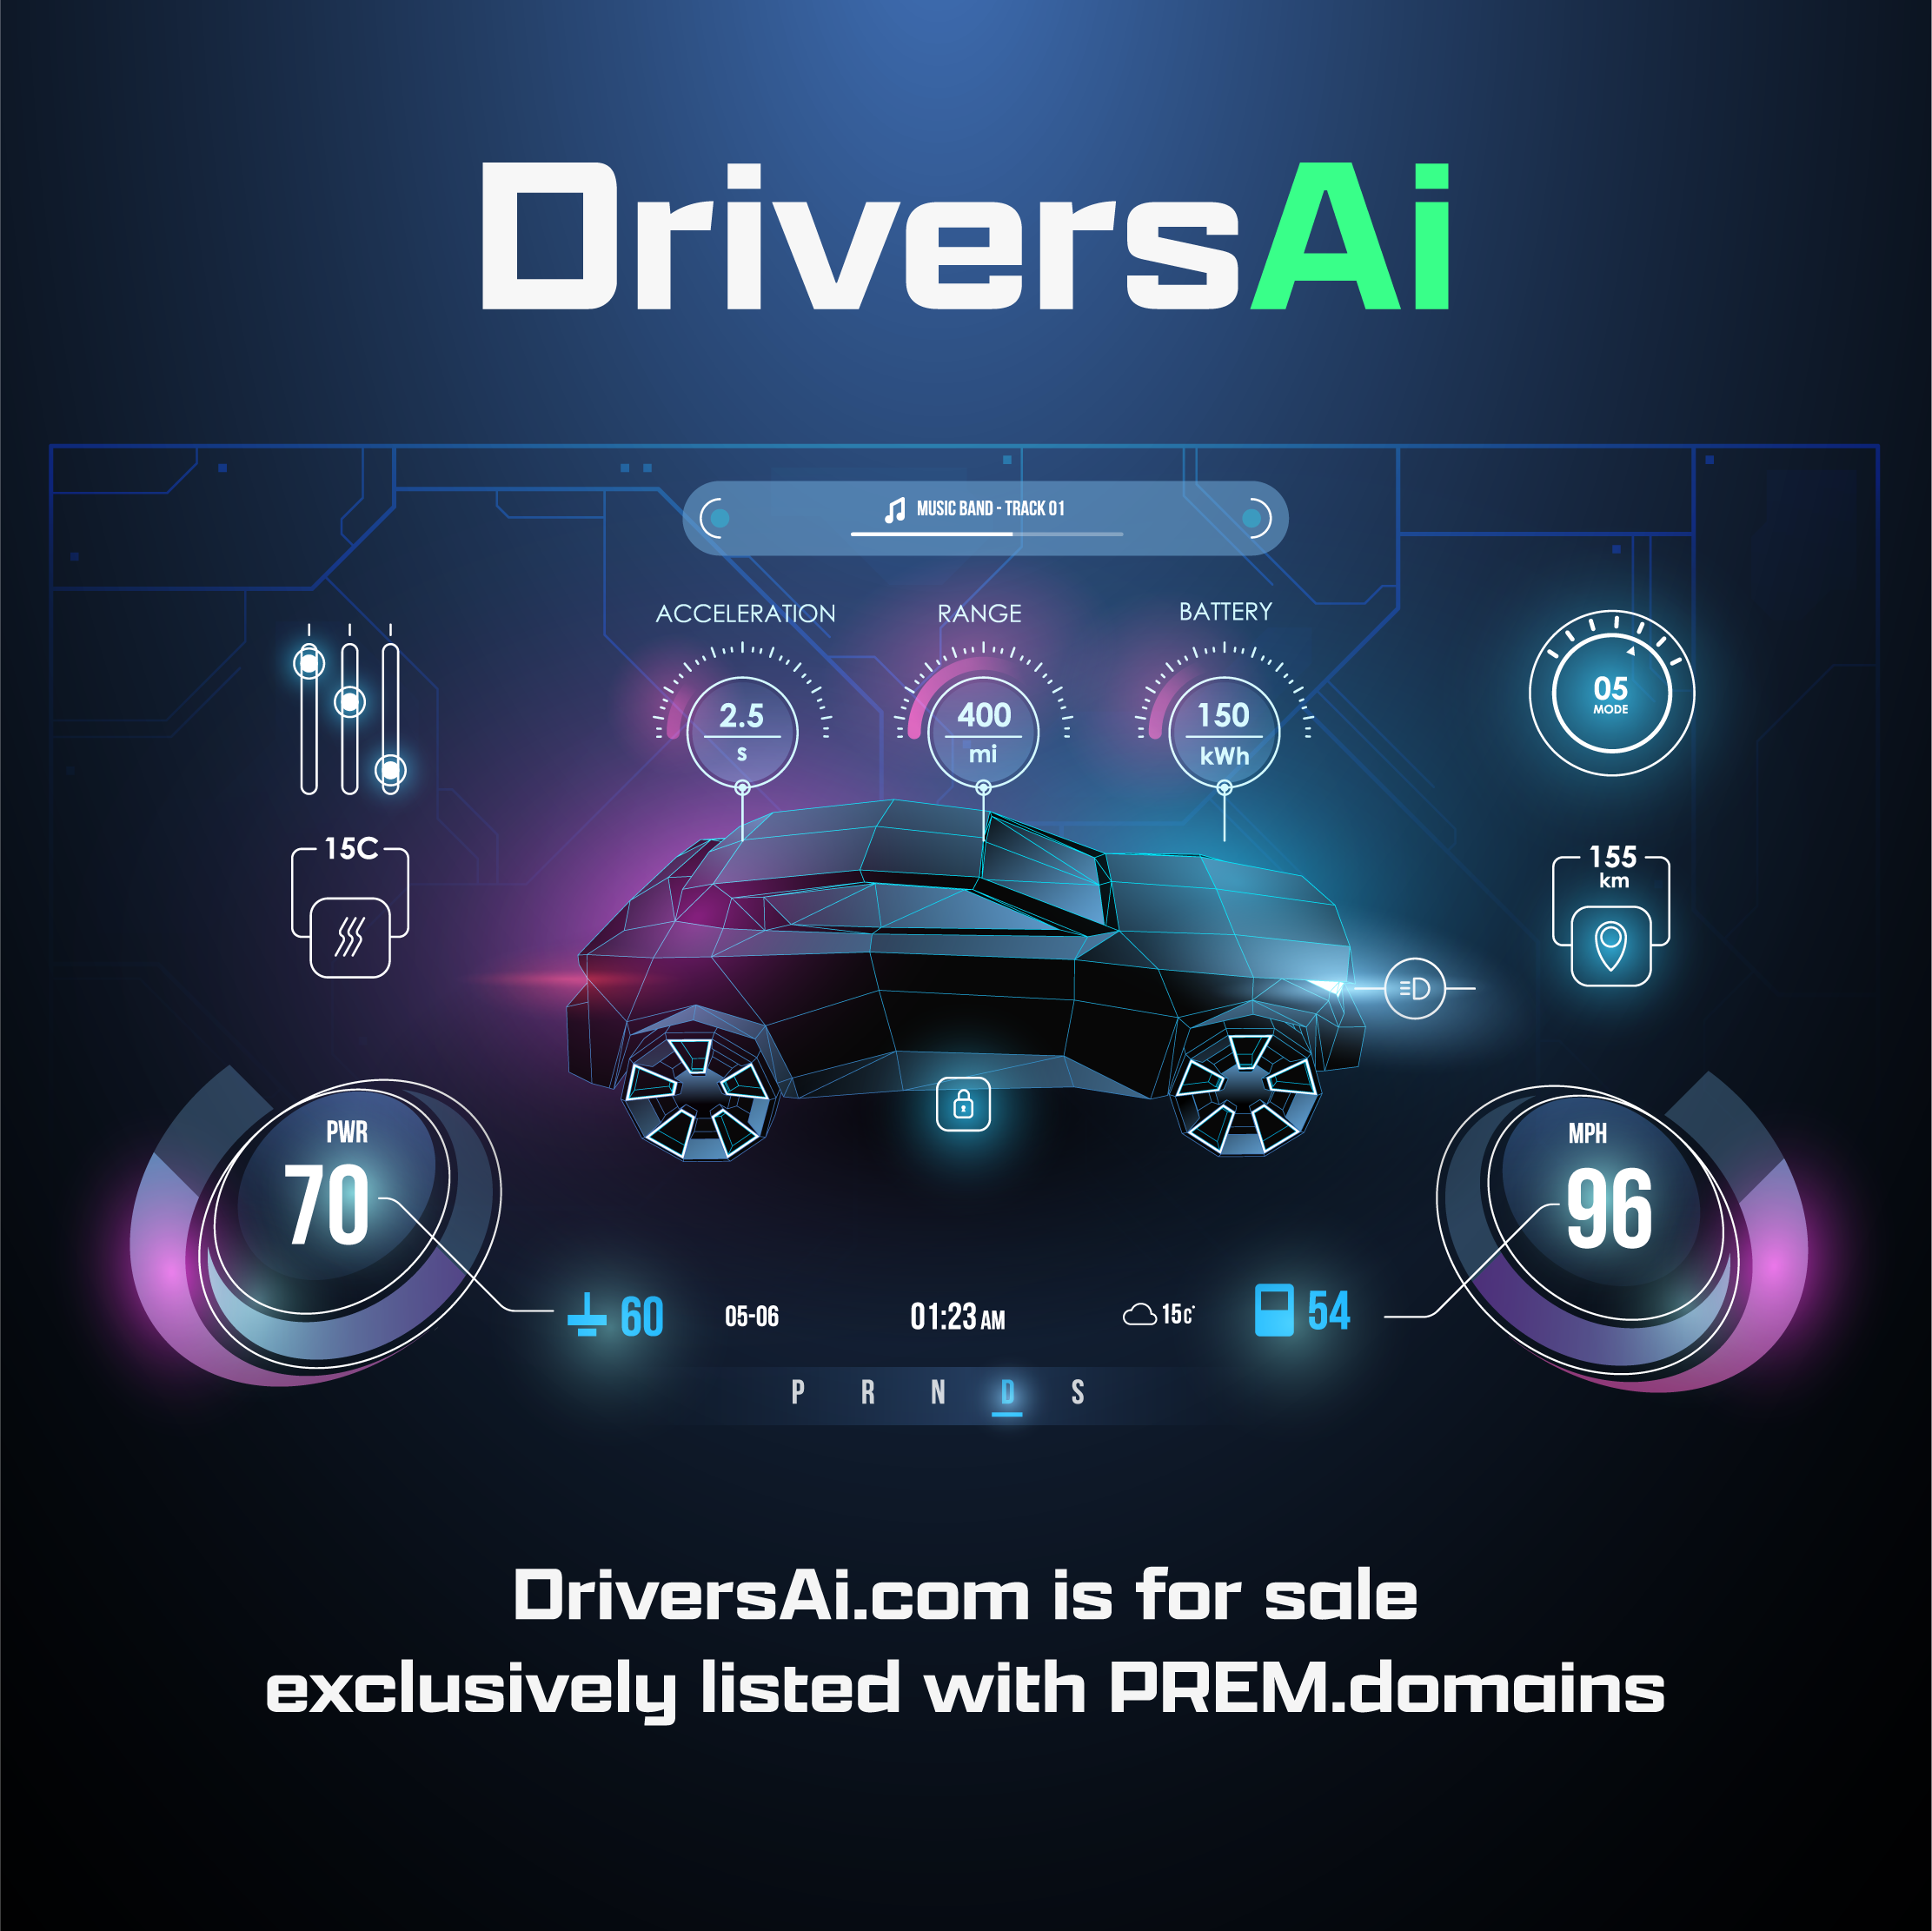 DriversAI.com custom logo product card image